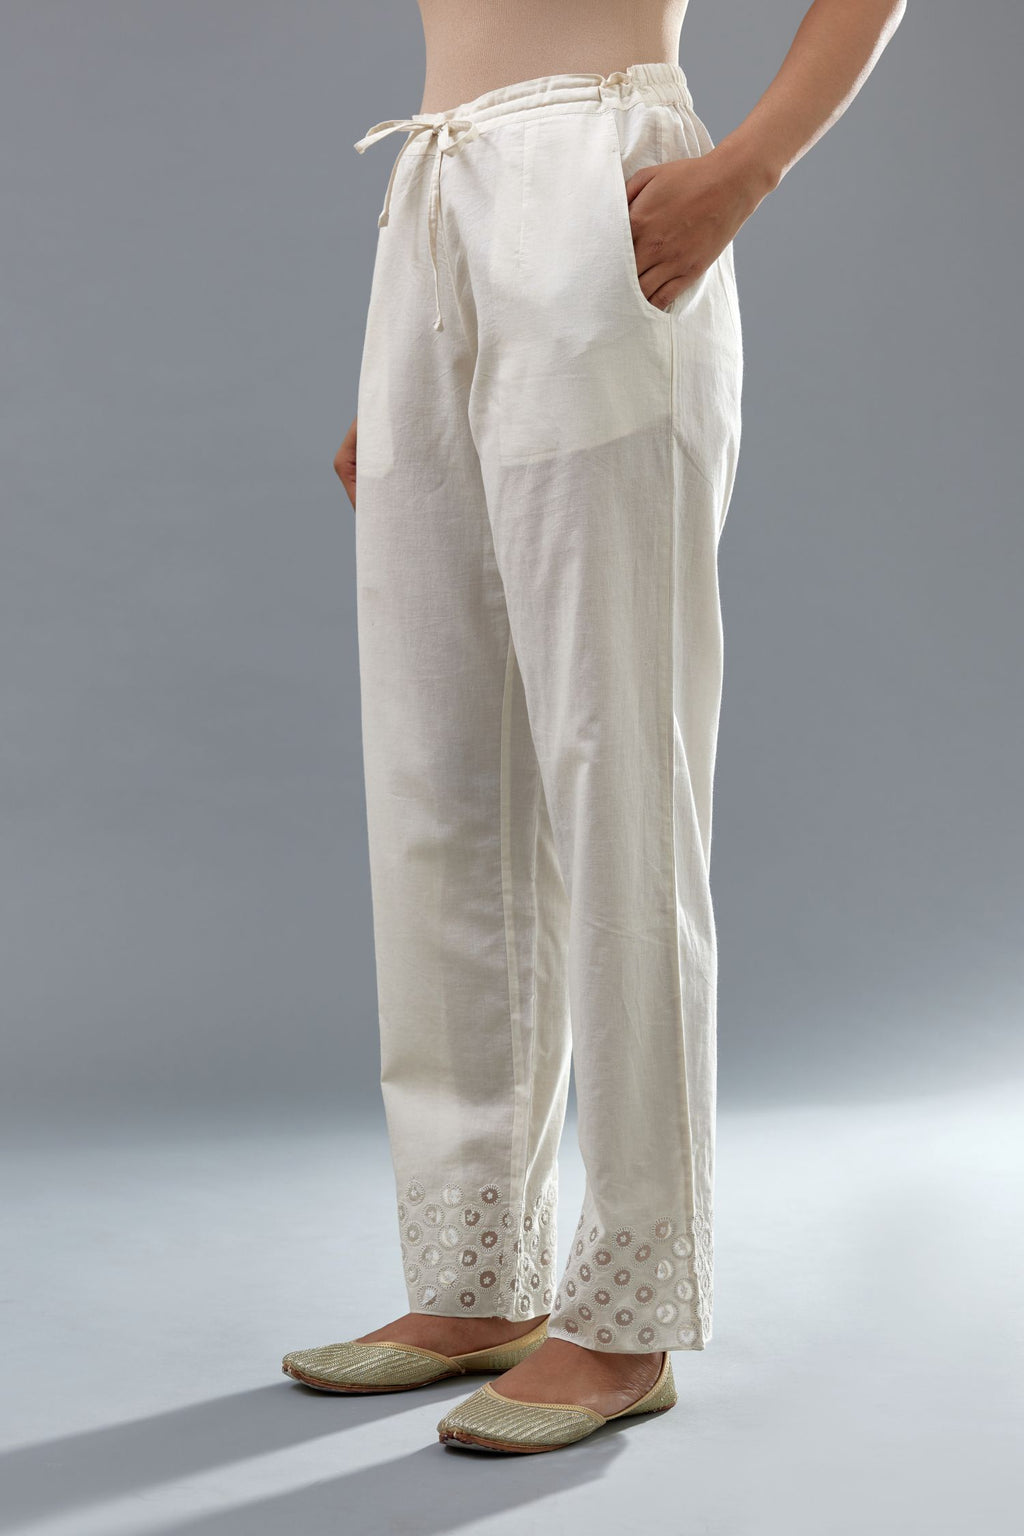 Indigo Textured Solid Straight Fit Cotton Trouser – 11.11/eleven eleven